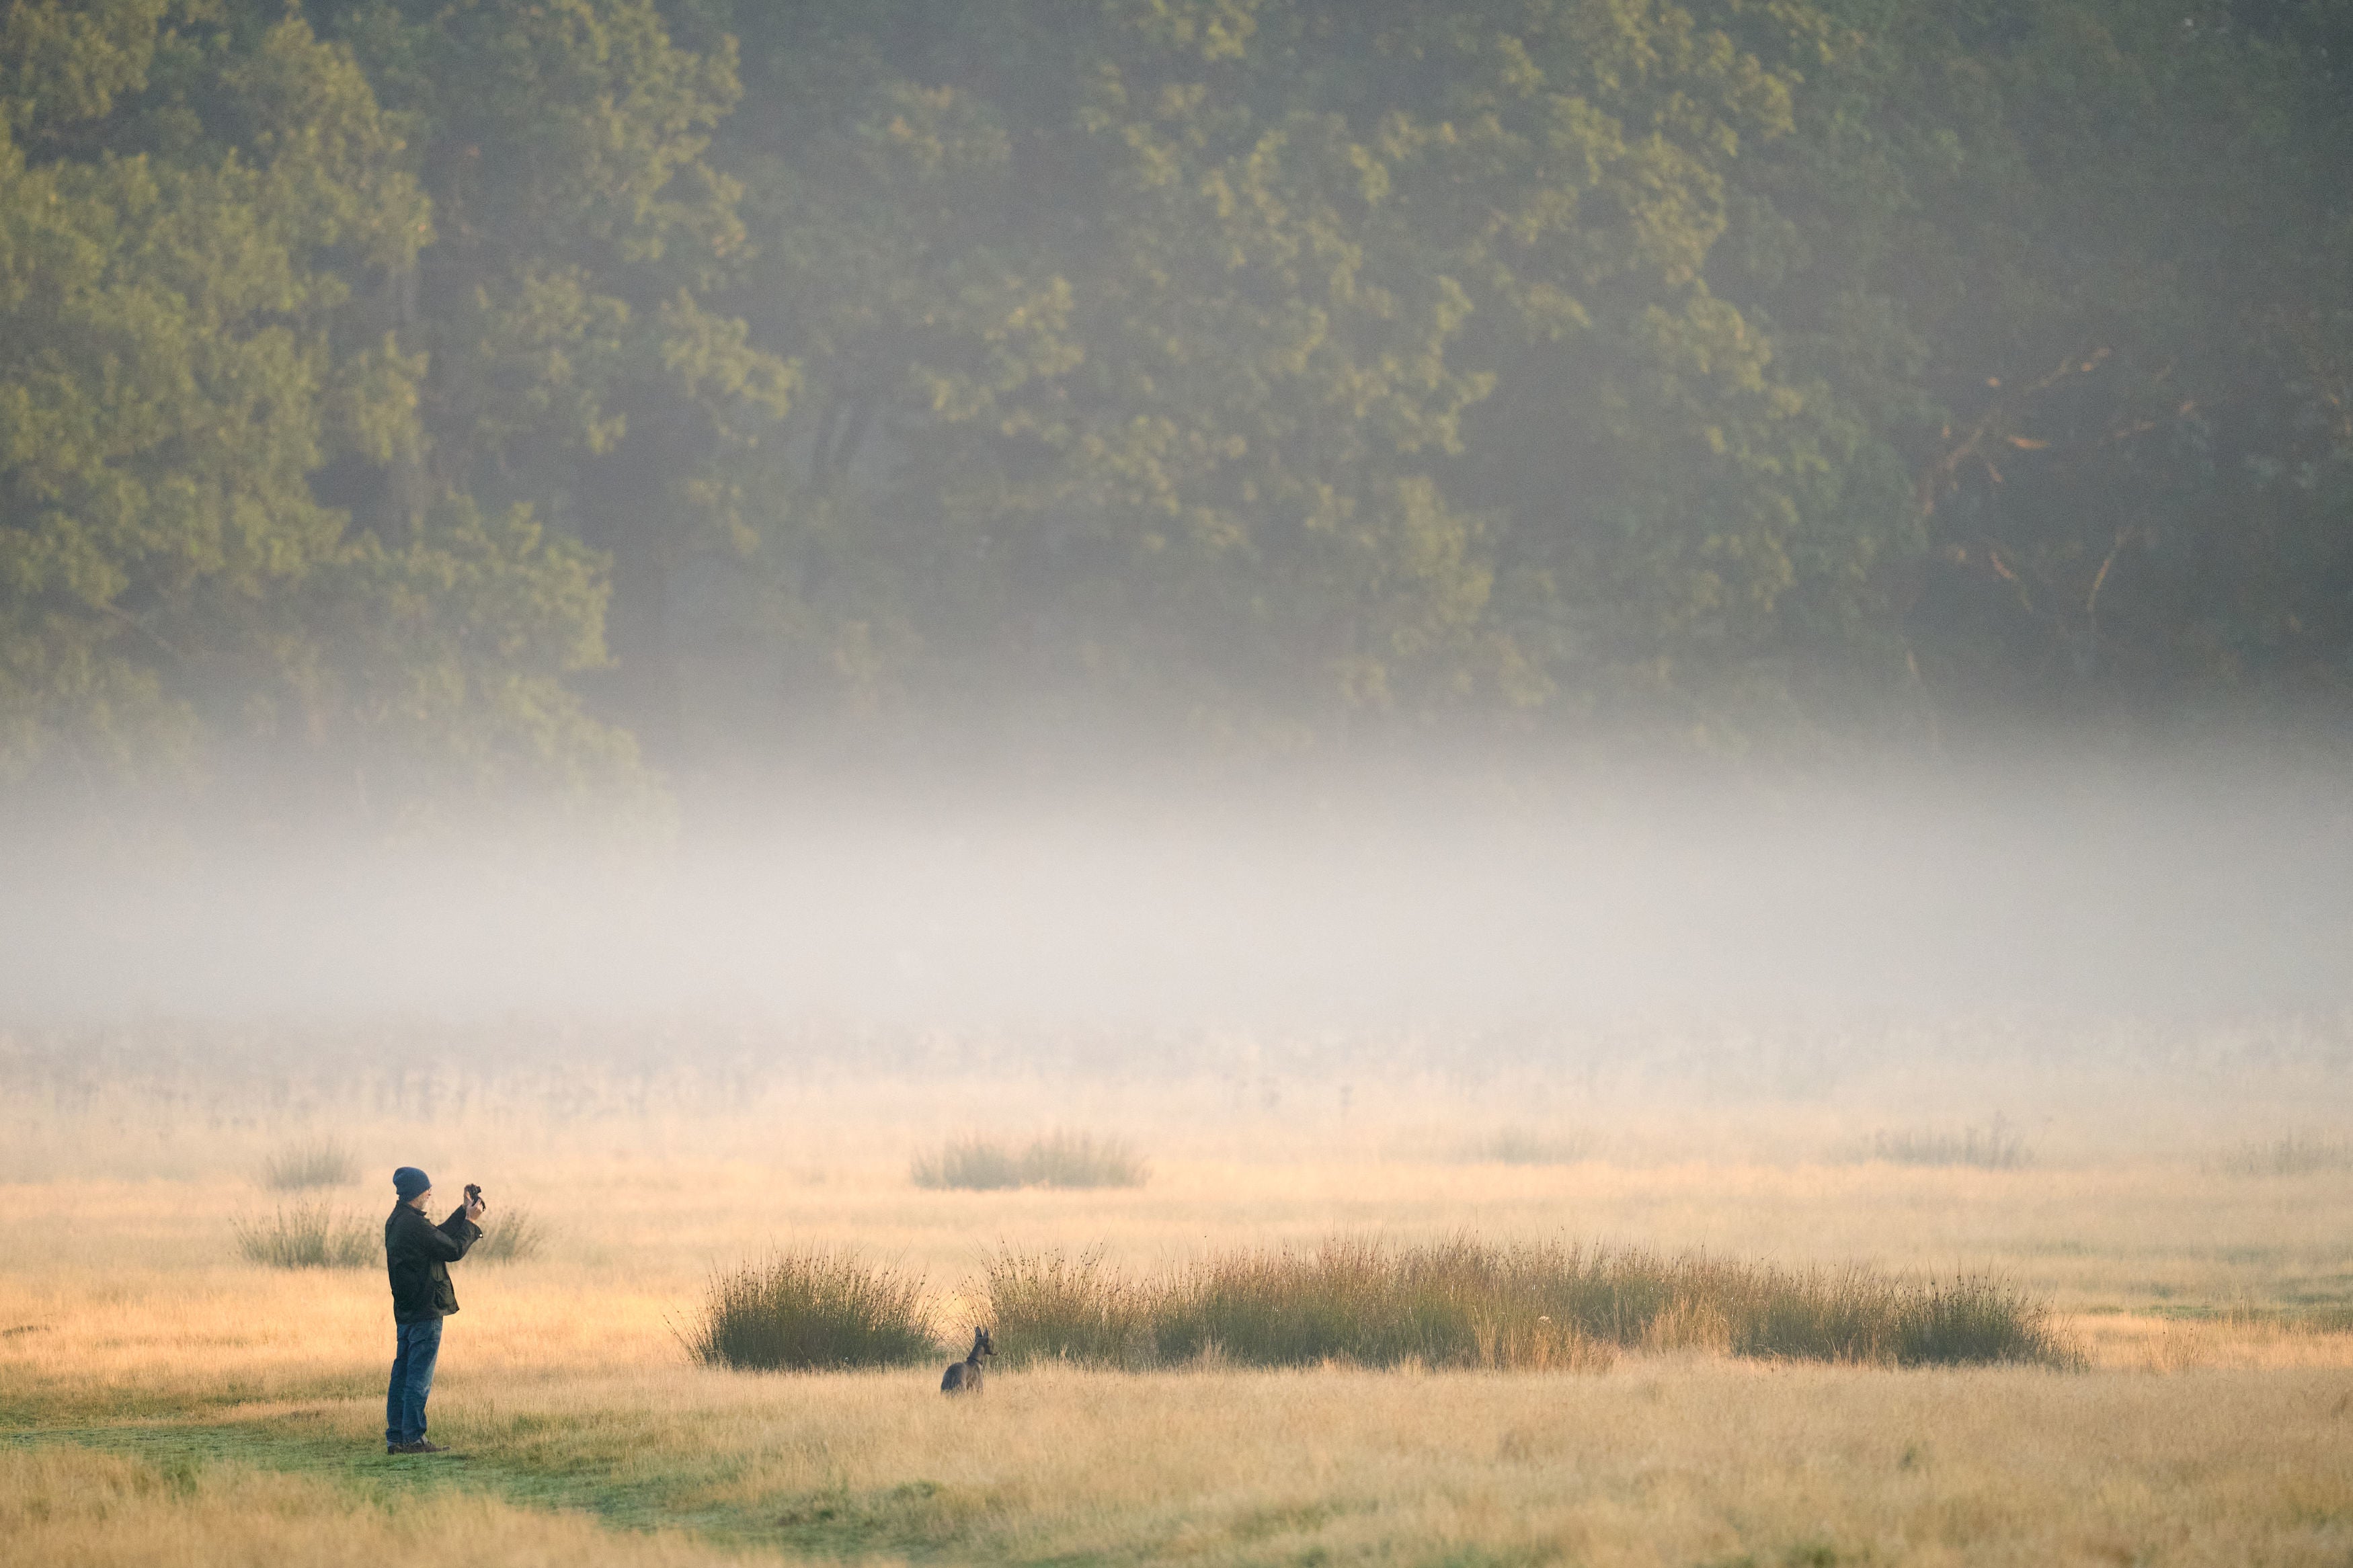 Mist in Richmond Park, London on September 16, 2021